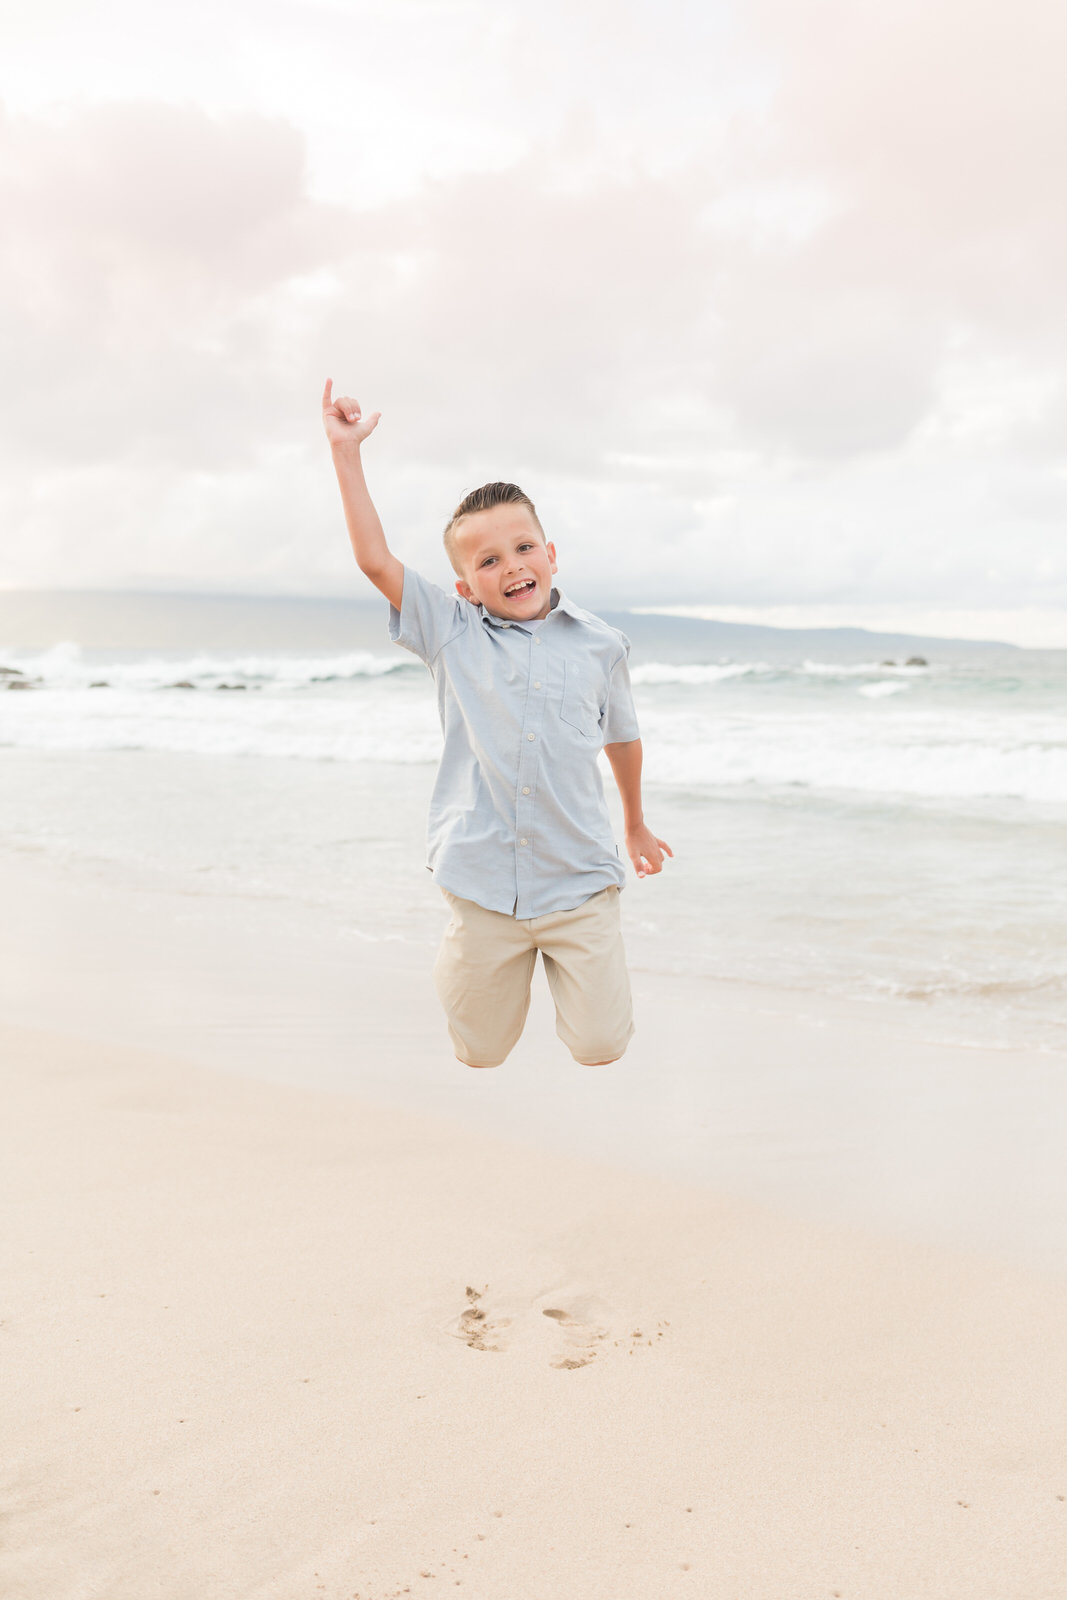 Maui family photography - boy jumping